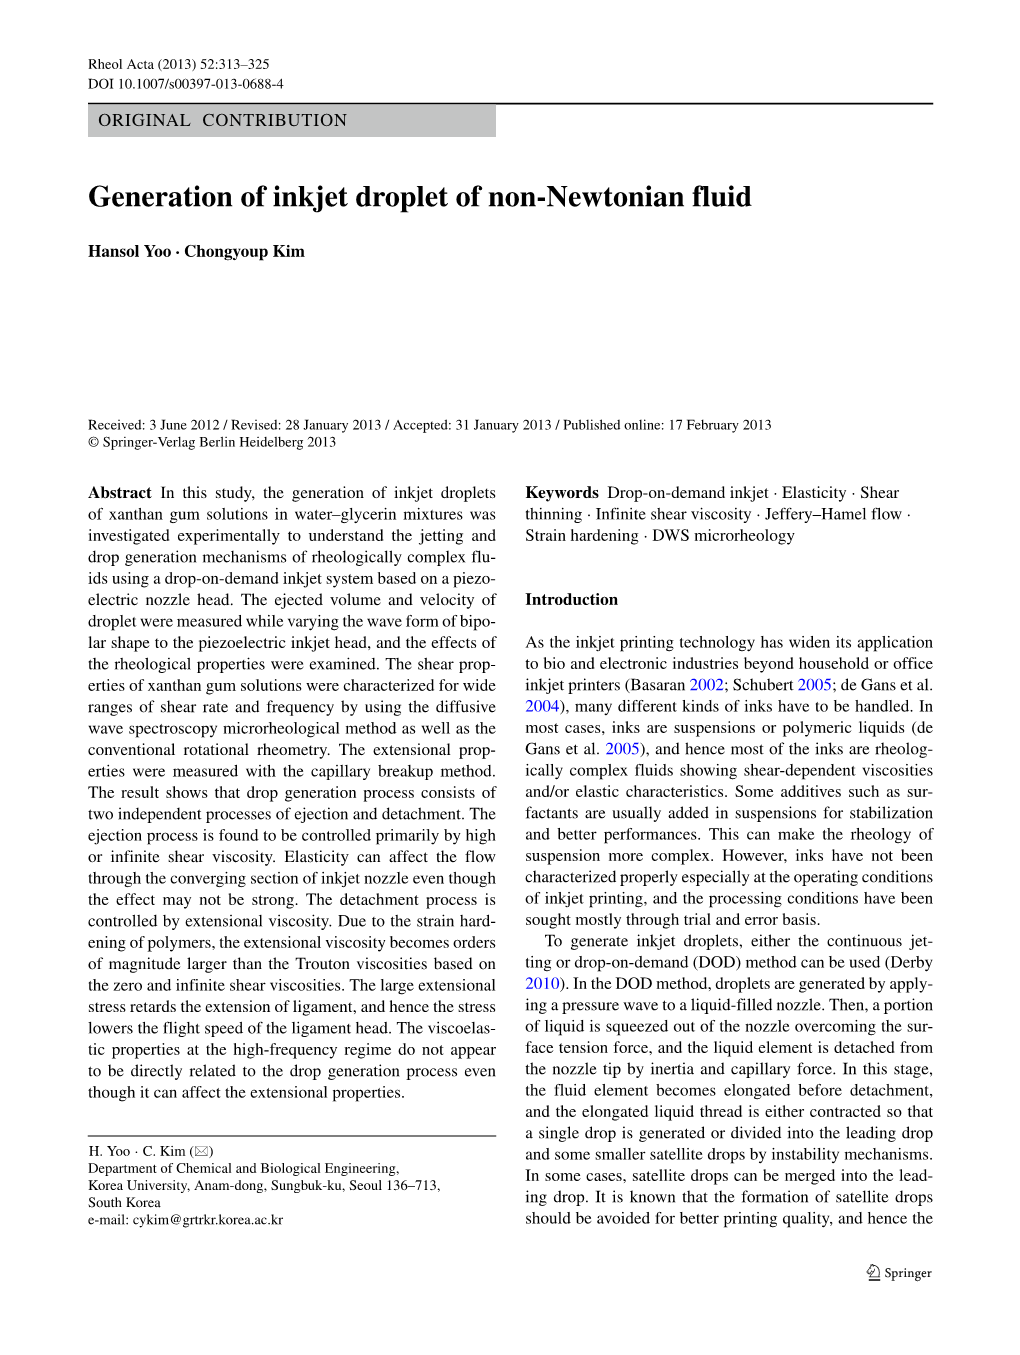 Generation of Inkjet Droplet of Non-Newtonian Fluid